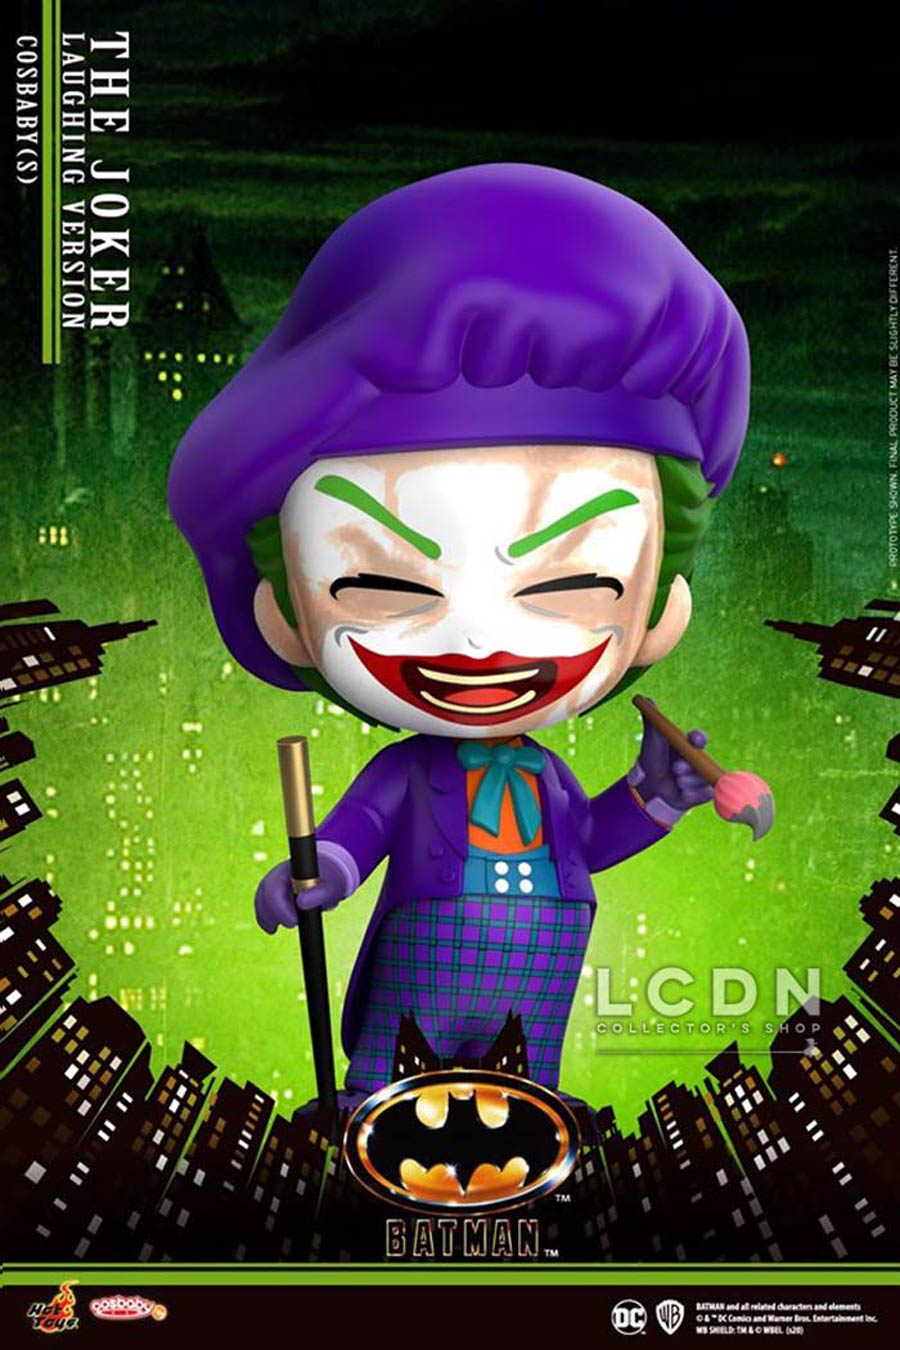 Batman 1989 Joker Laughing Version Collectible Figure